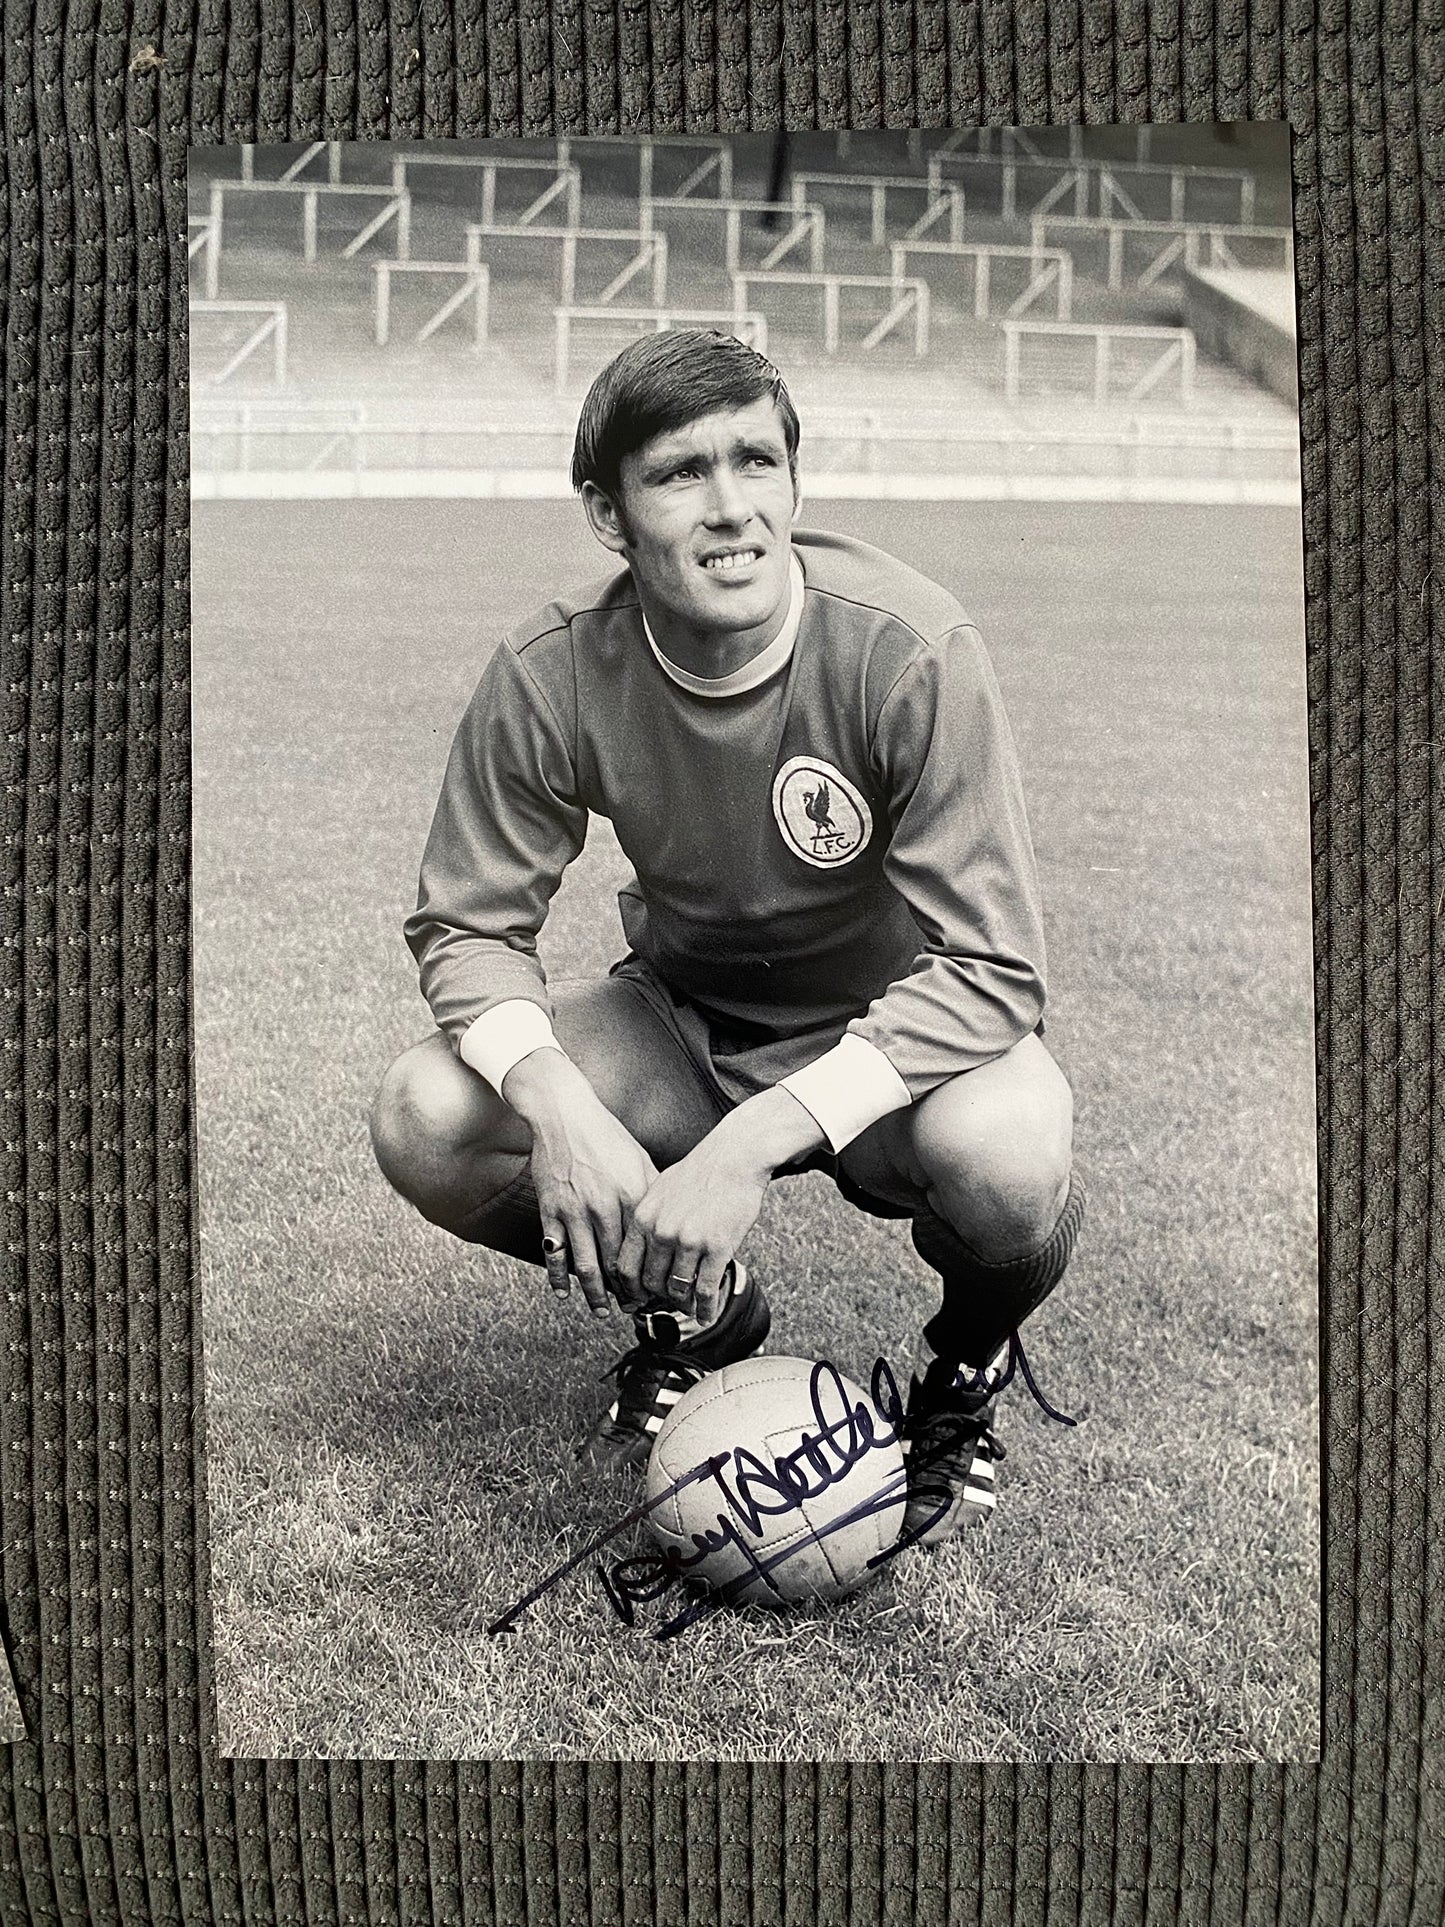 Tony Hateley - Liverpool FC - A4 signed photo - LFC memorabilia, gift, autograph